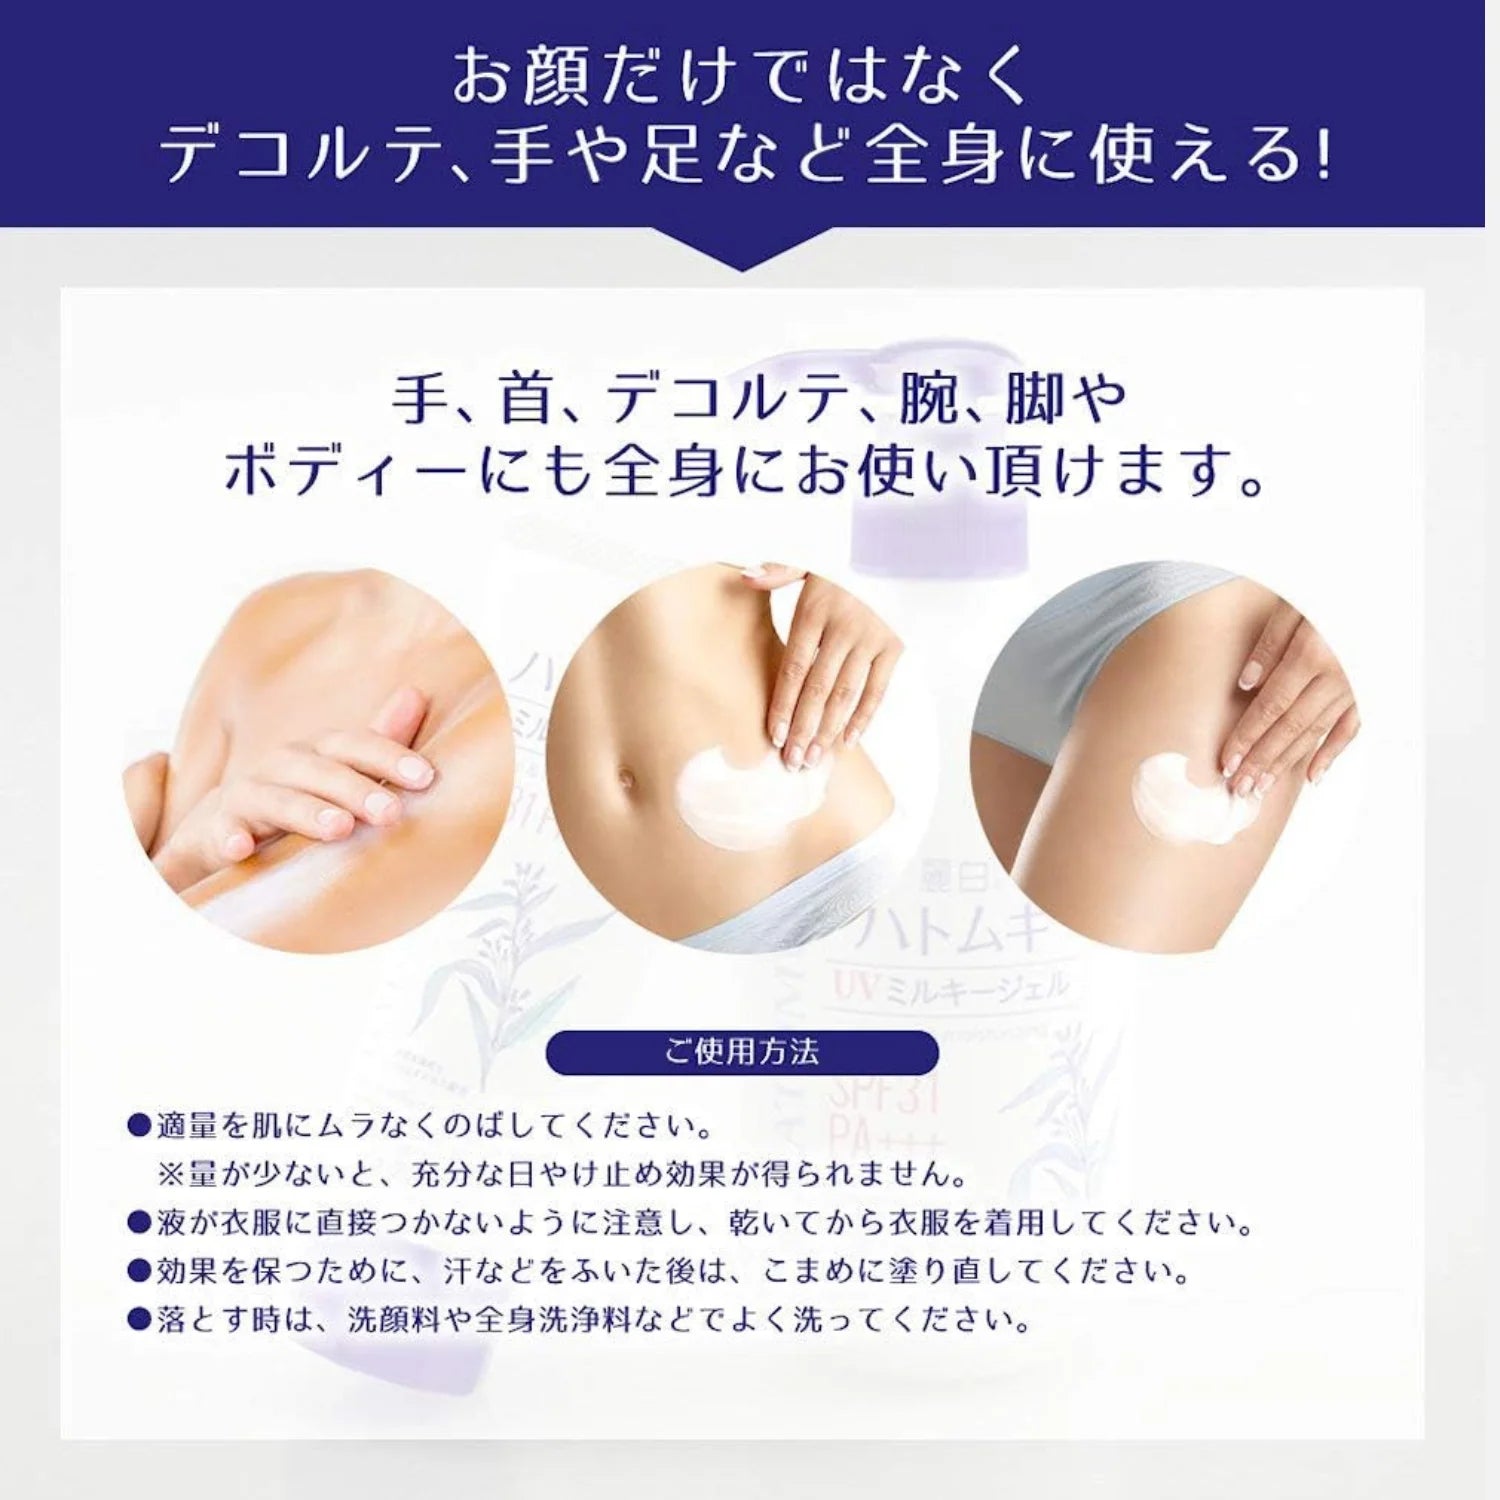 Reihaku Hatomugi Moisturizing UV Milky Gel SPF 31 PA+++ 250g - Buy Me Japan